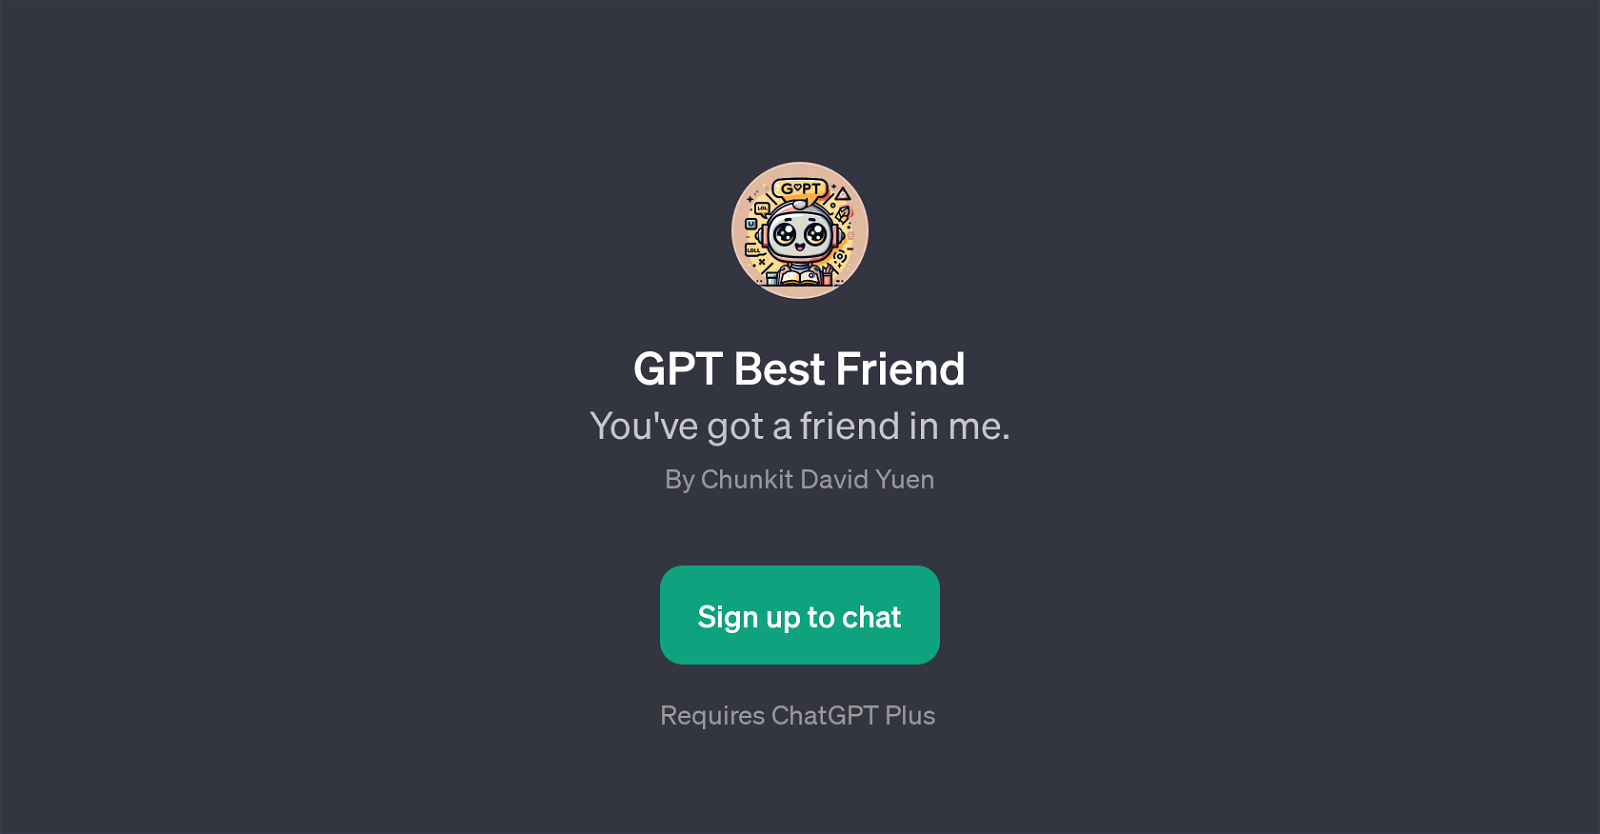 GPT Best Friend website